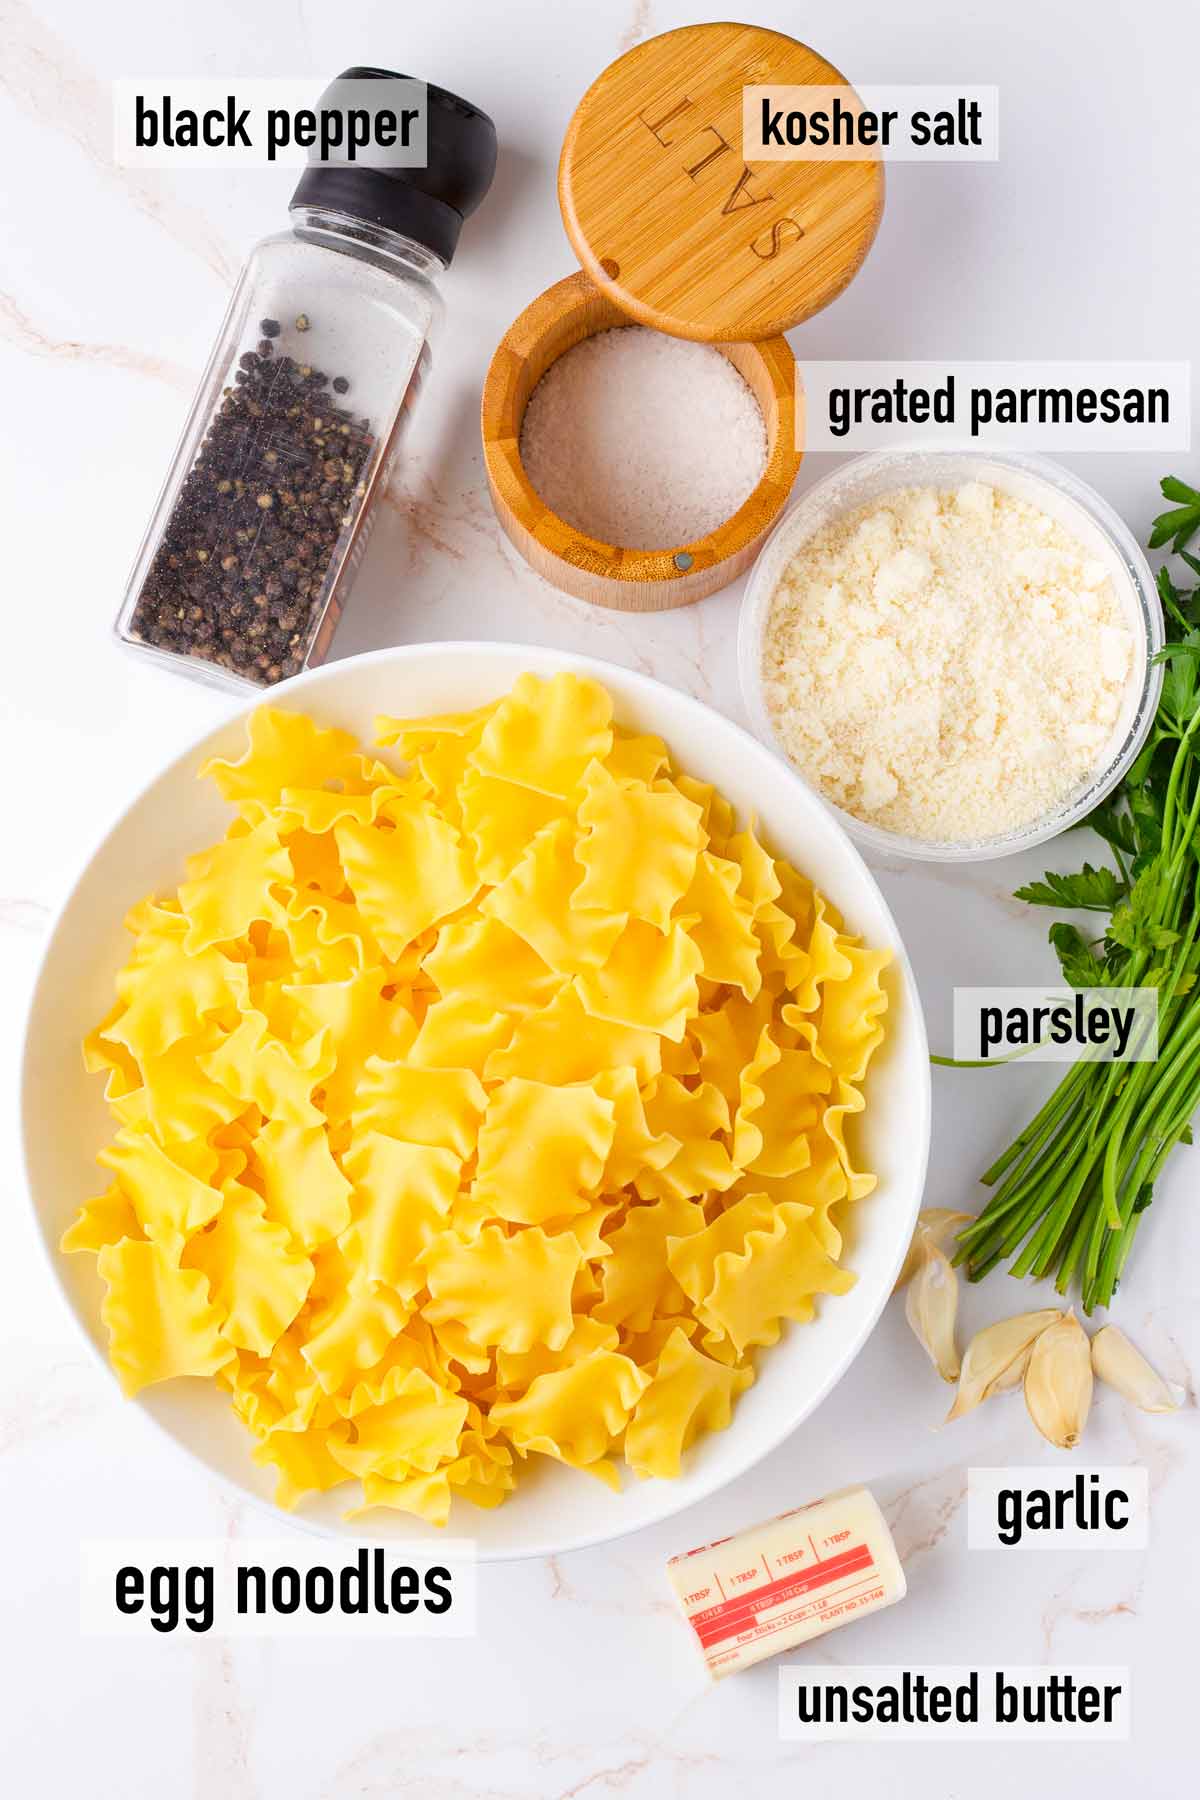 labeled ingredients to make garlic buttered egg noodles